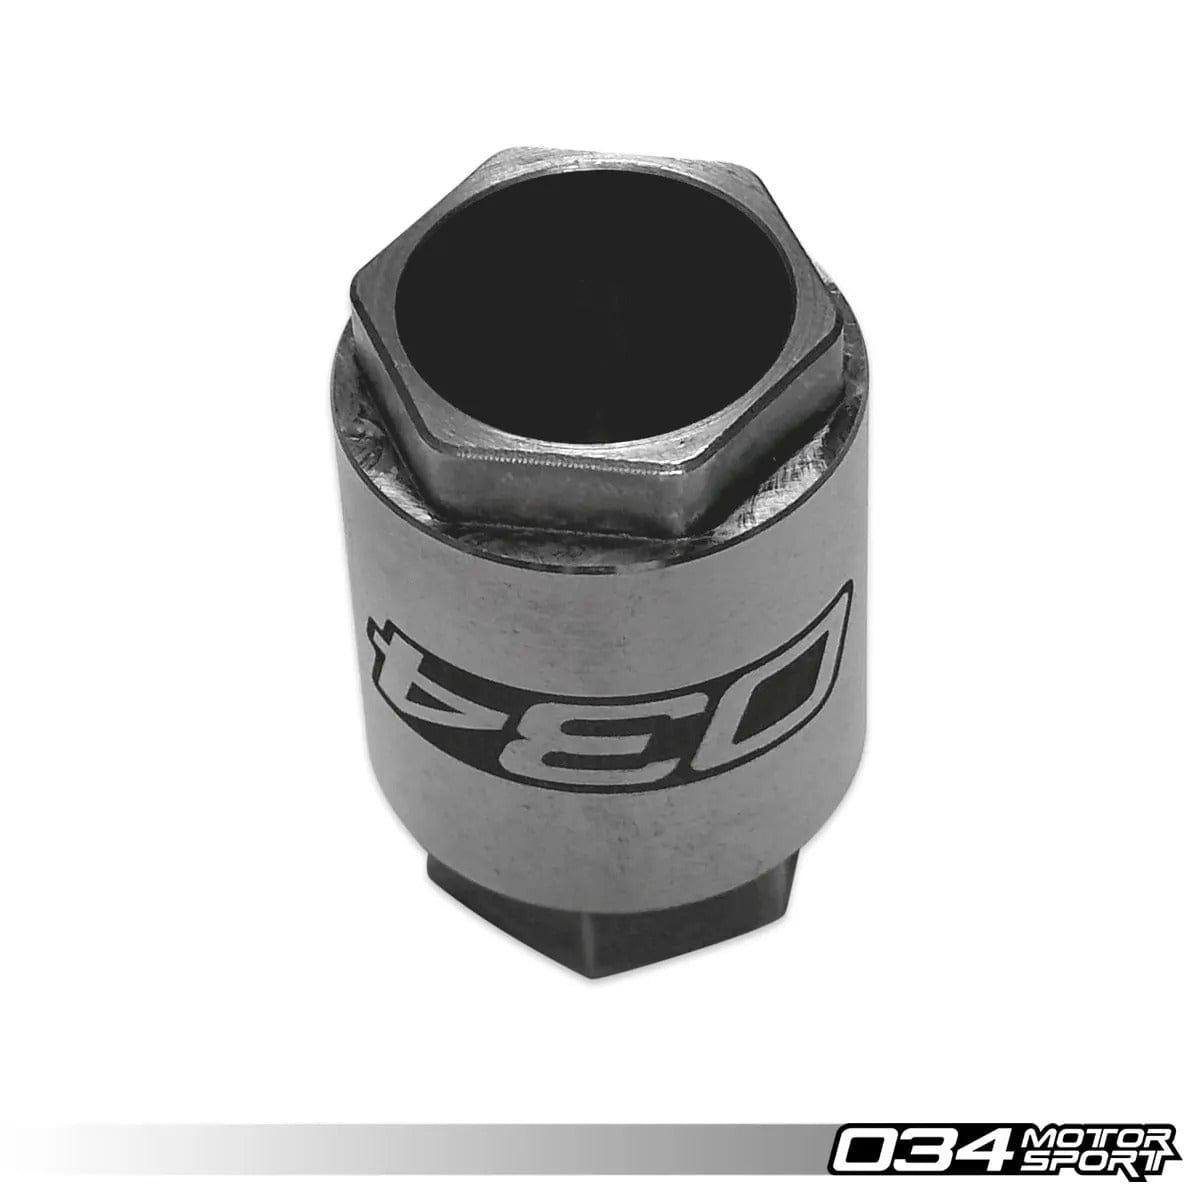 034 Motorsport High Pressure Fuel Pump Piston Tool - VW/Audi / EA888 Gen 3 2.0T / 4.0T / C7 / C7.5 / S6 / S7 / S8 / RS7